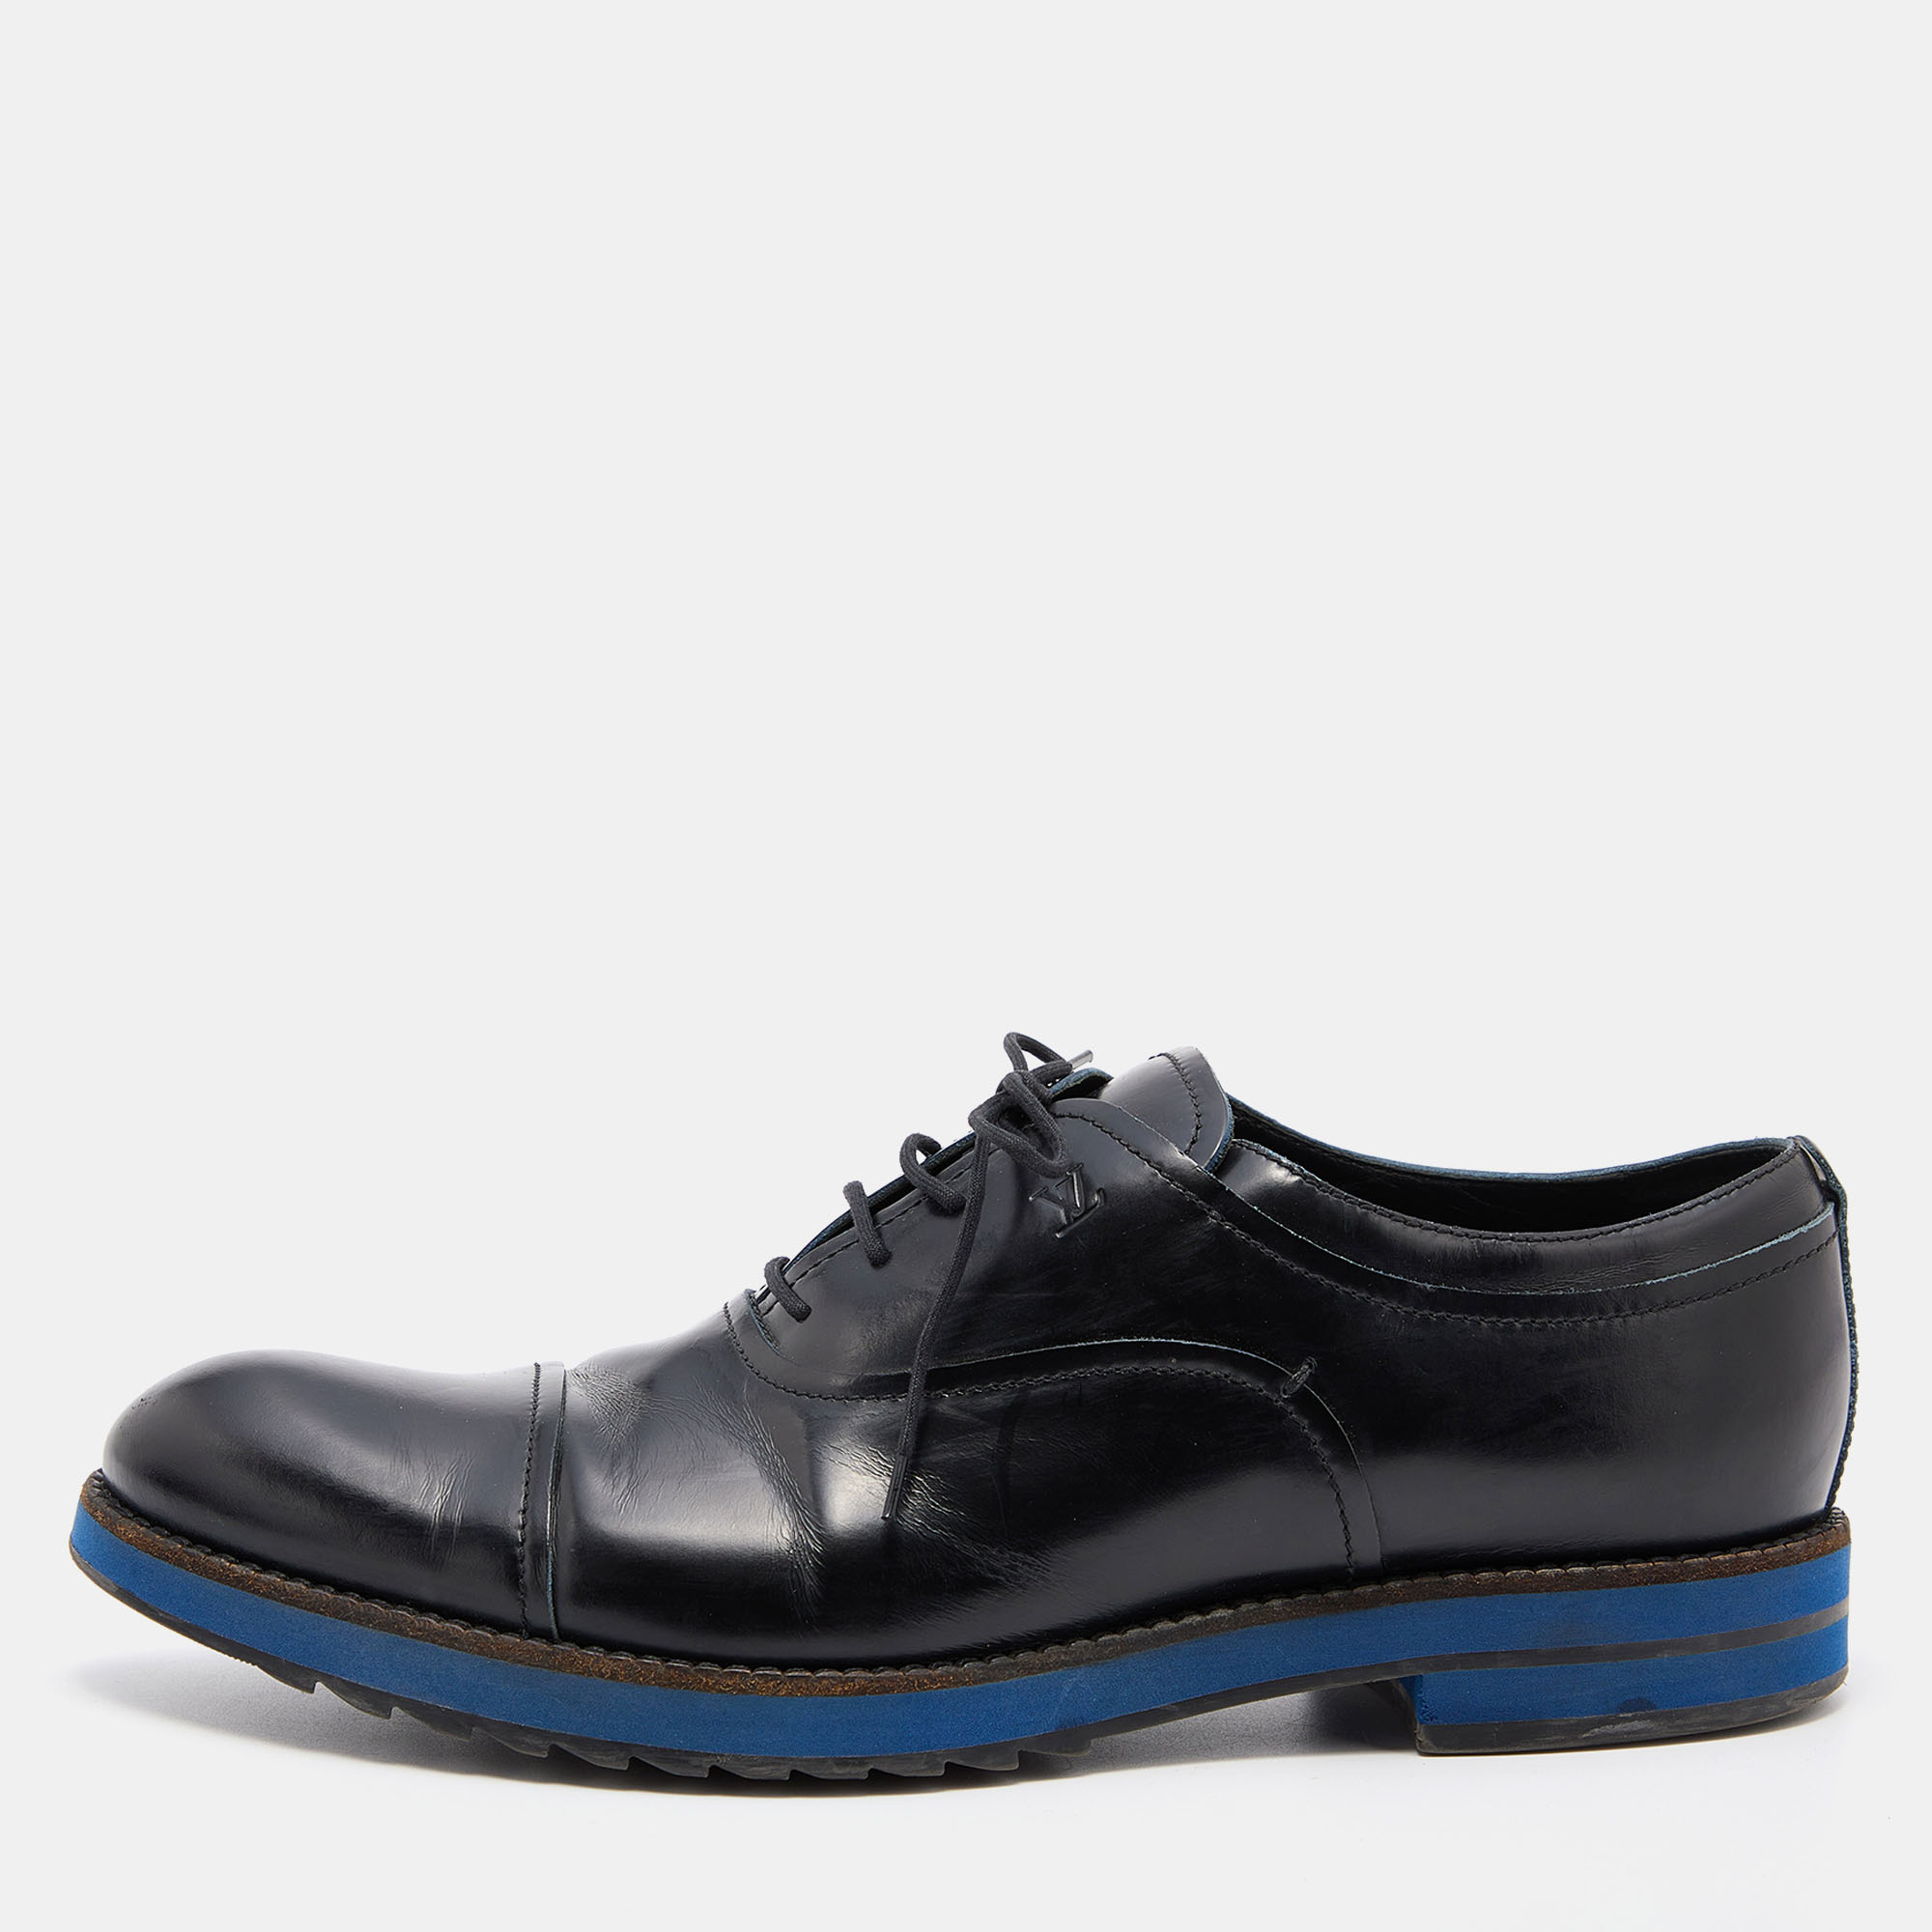 Louis Vuitton oxford Goodyear UK8.5 / US 9.5 / 42.5 mens shoes